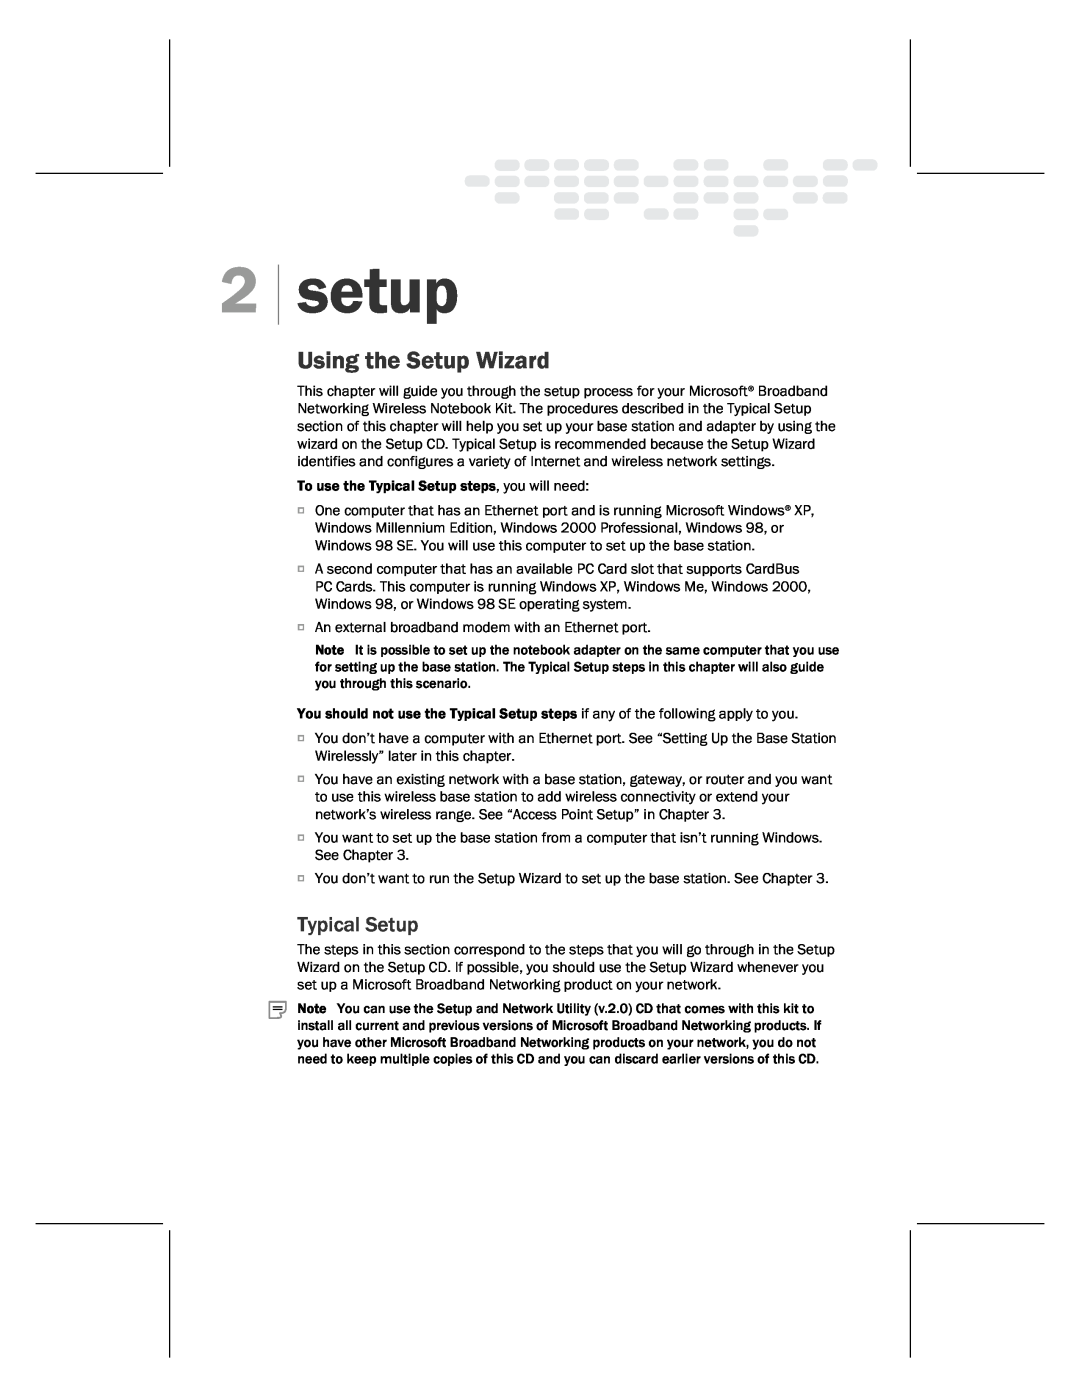 Microsoft MN-820 manual setup, Using the Setup Wizard, Typical Setup 